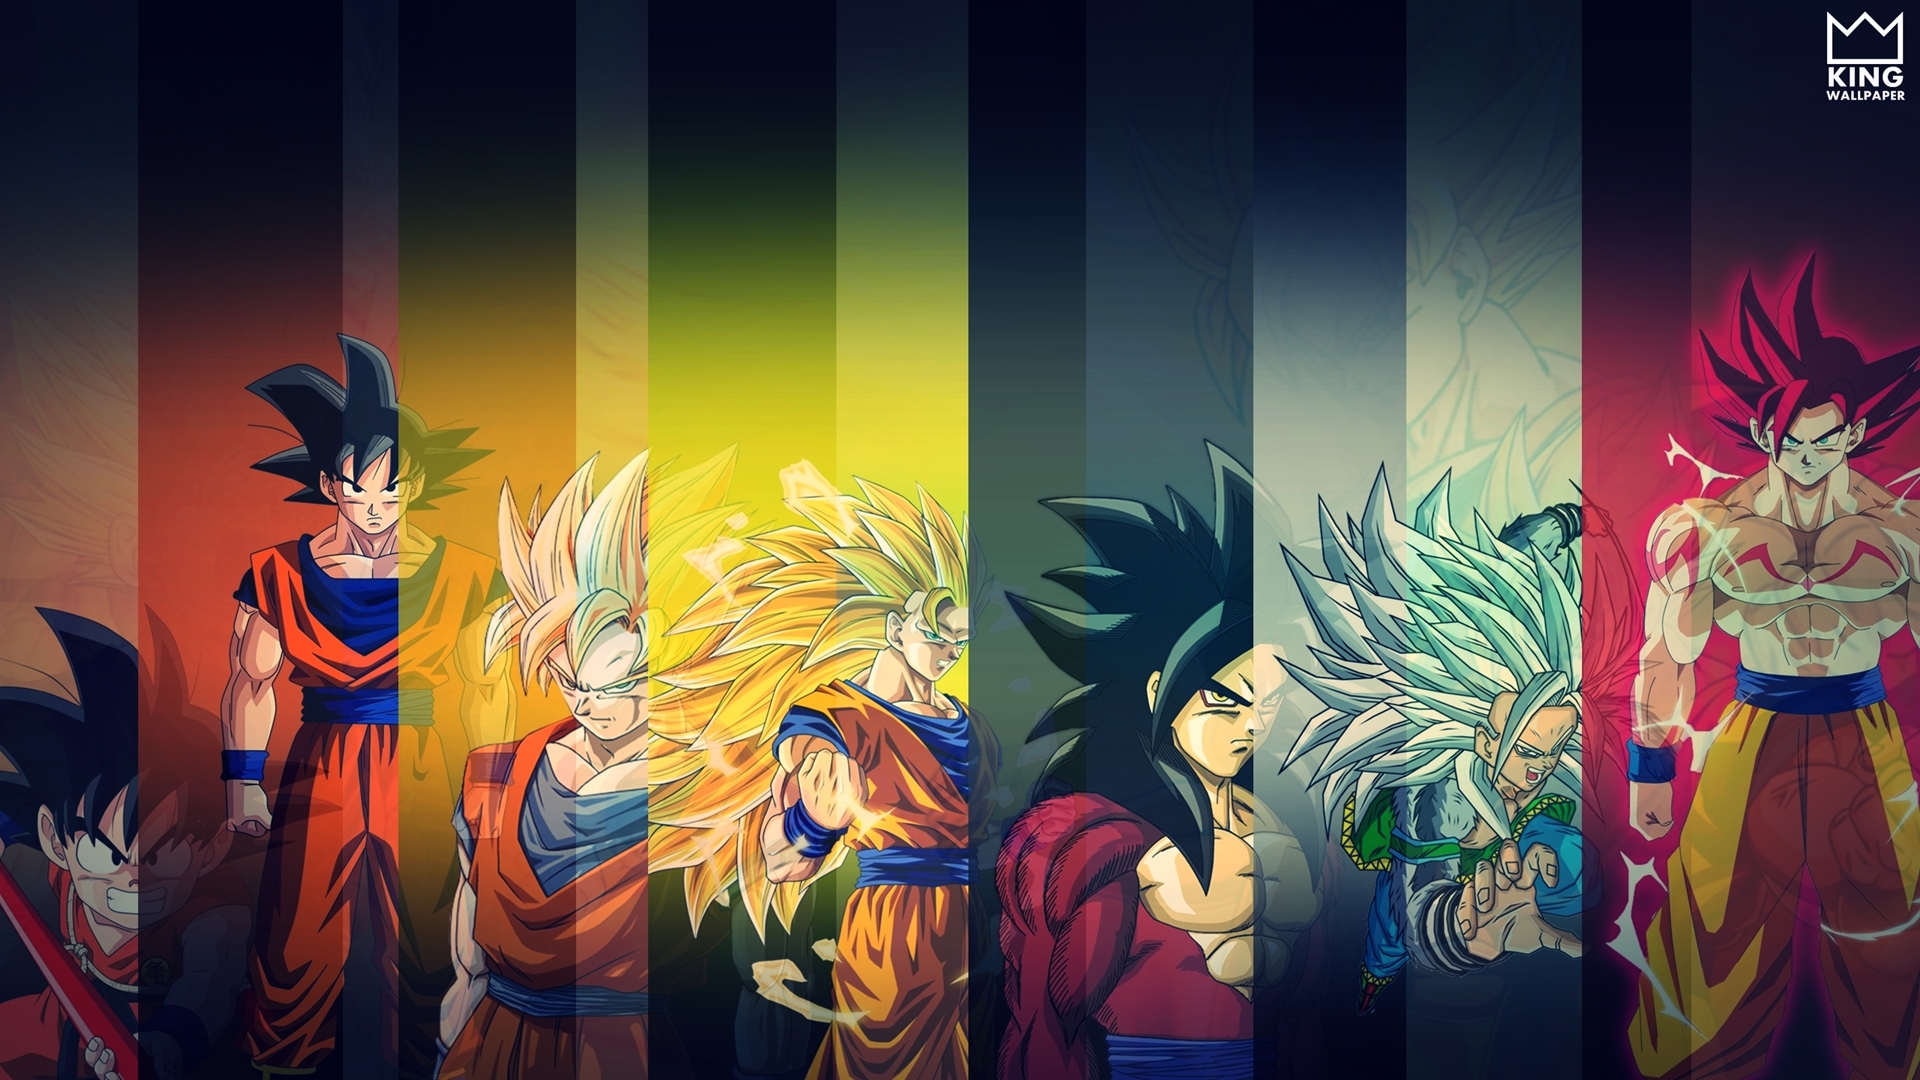 45+] Cool Wallpapers of Goku - WallpaperSafari